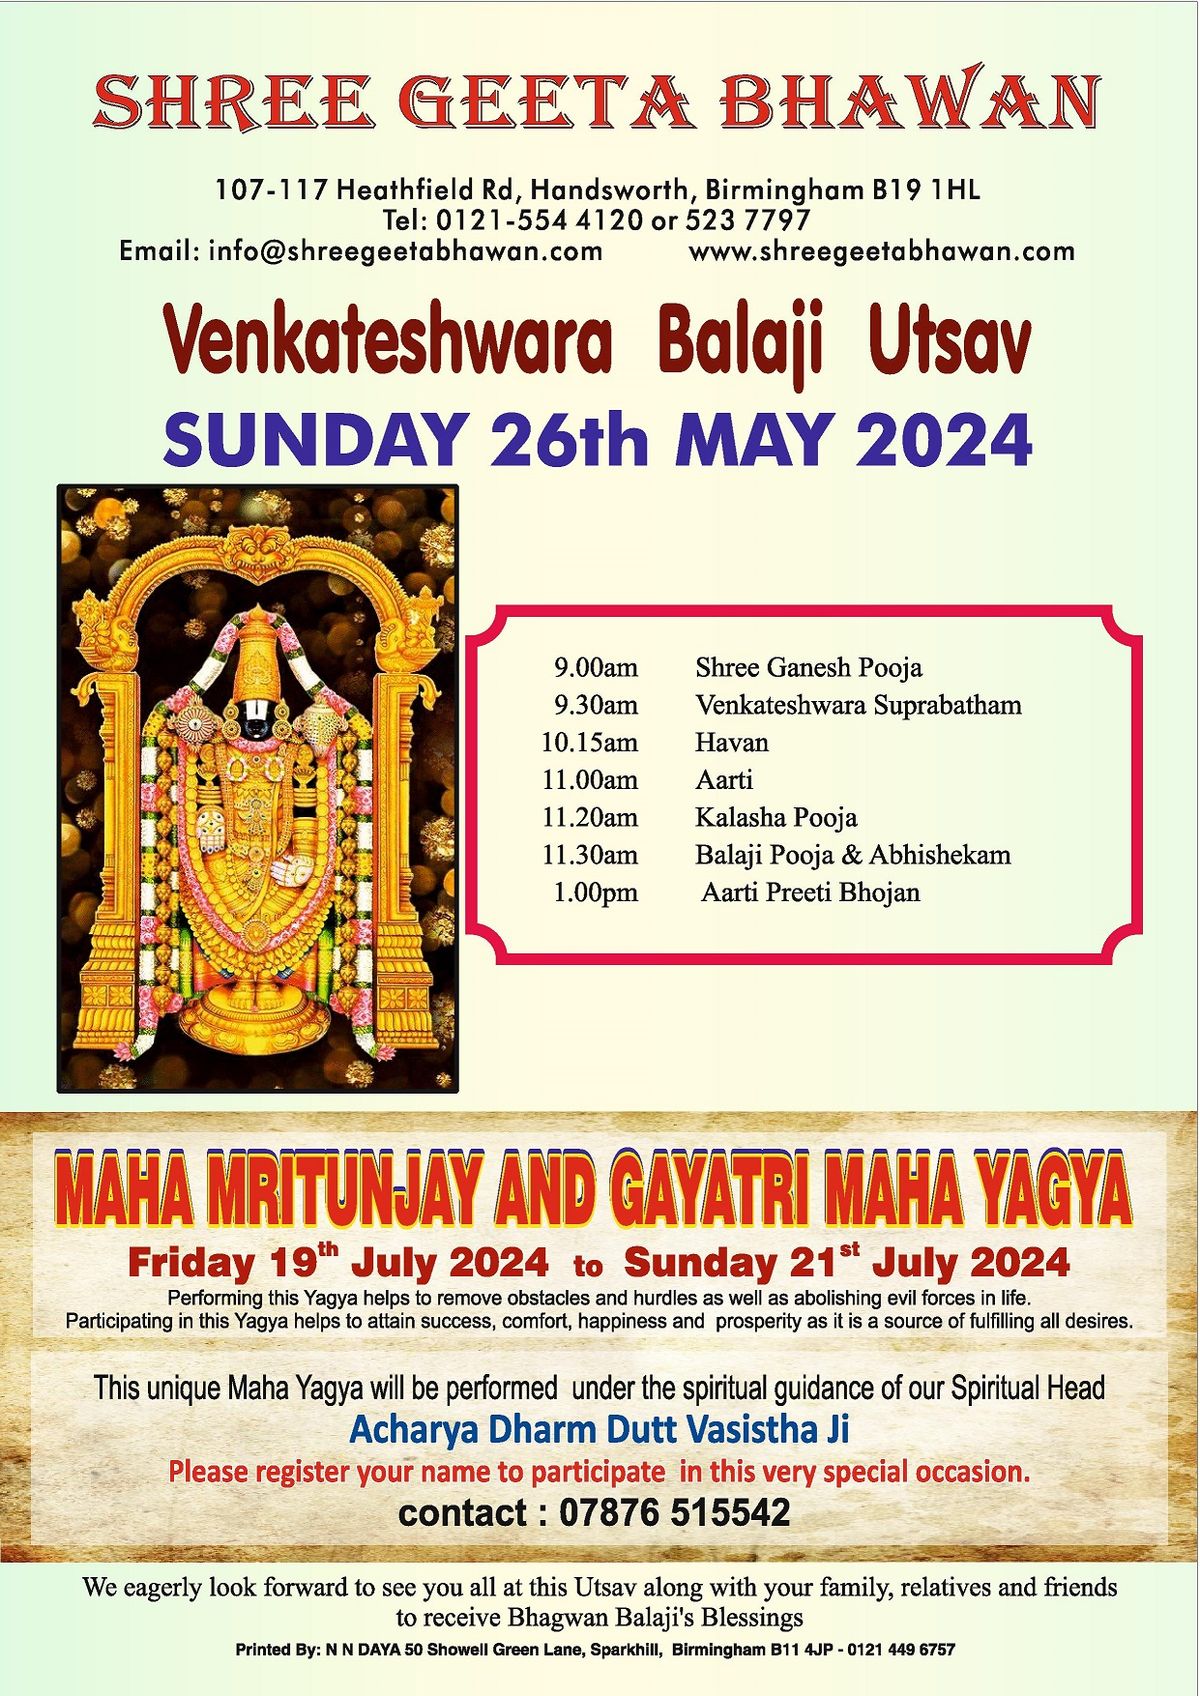 Venkateshwara Balaji Utsav